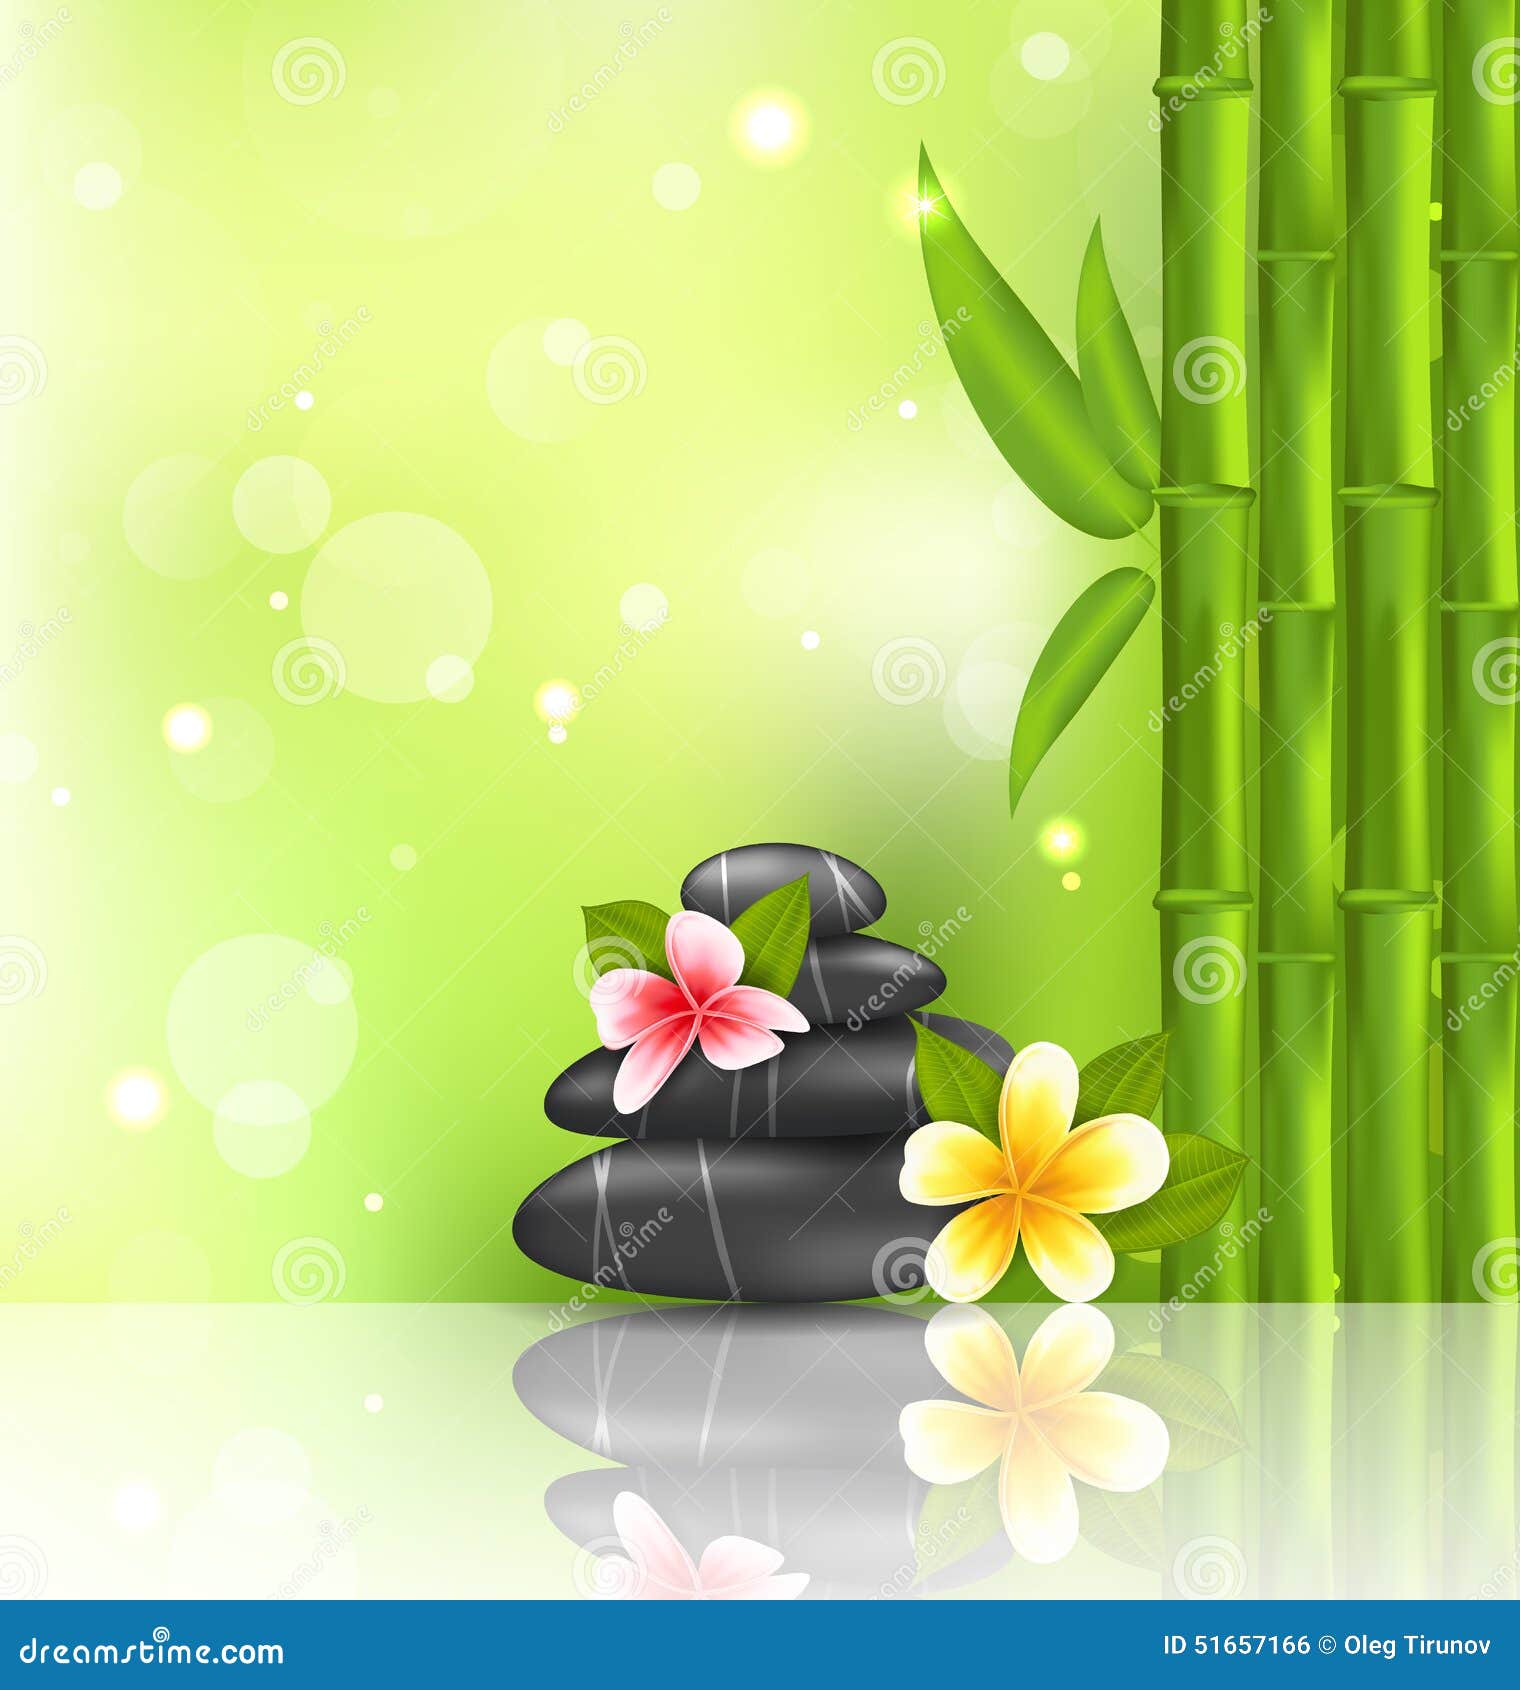 meditative oriental background with frangipani, bamboo and heap